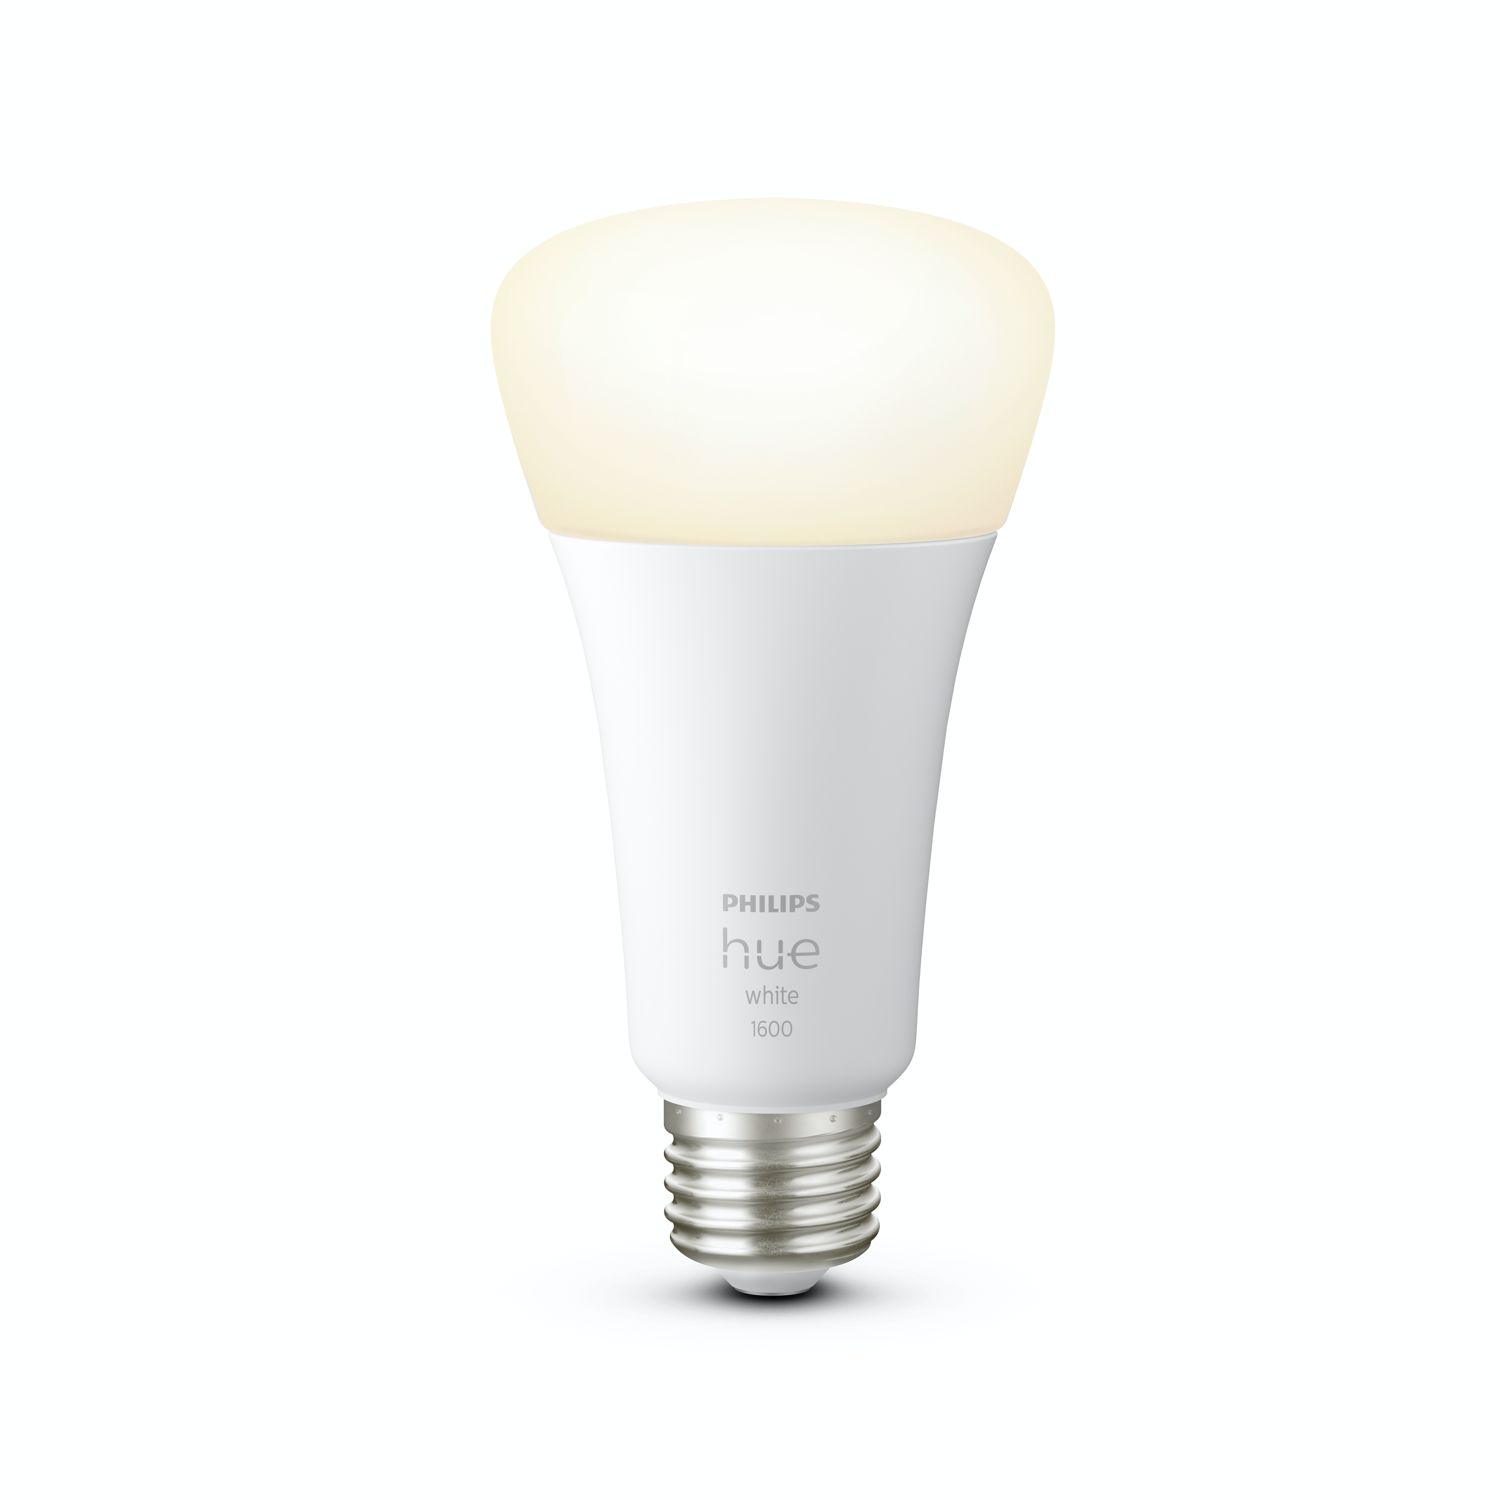 Ligation On foot And so on Modern Bulbs | Philips Hue US